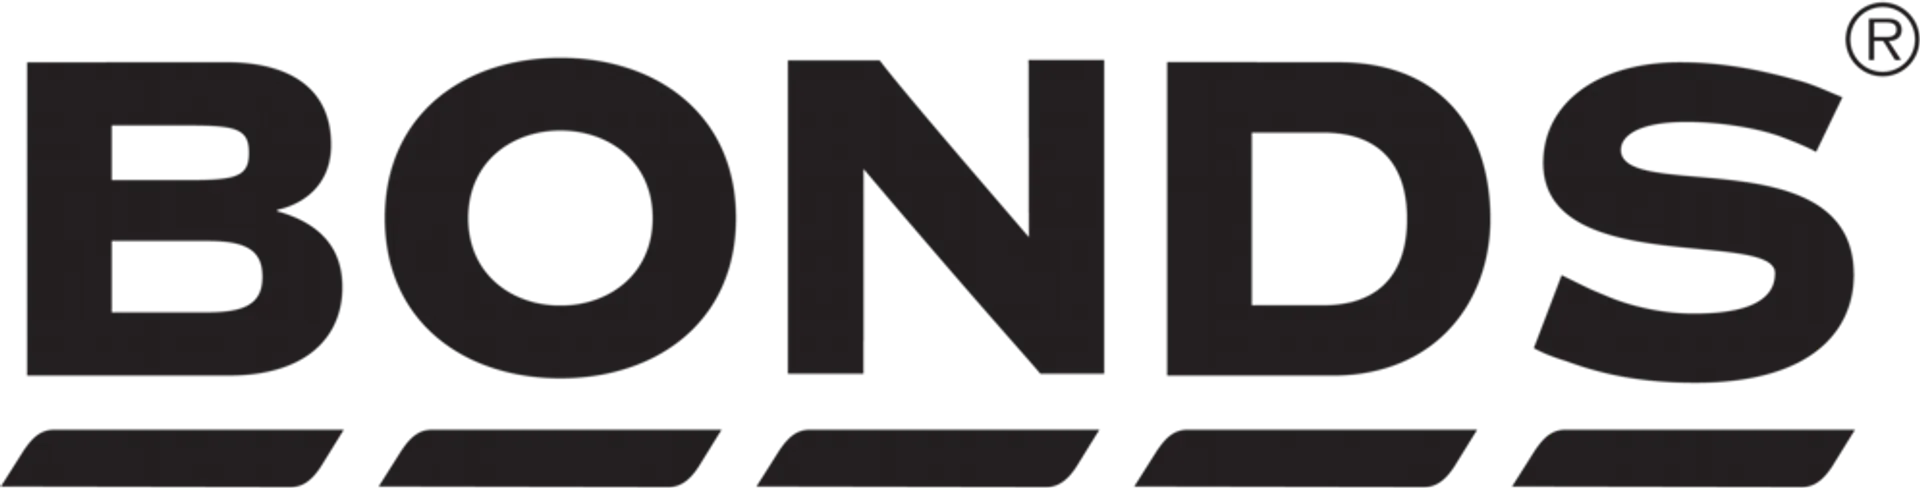 BONDS logo of current catalogue